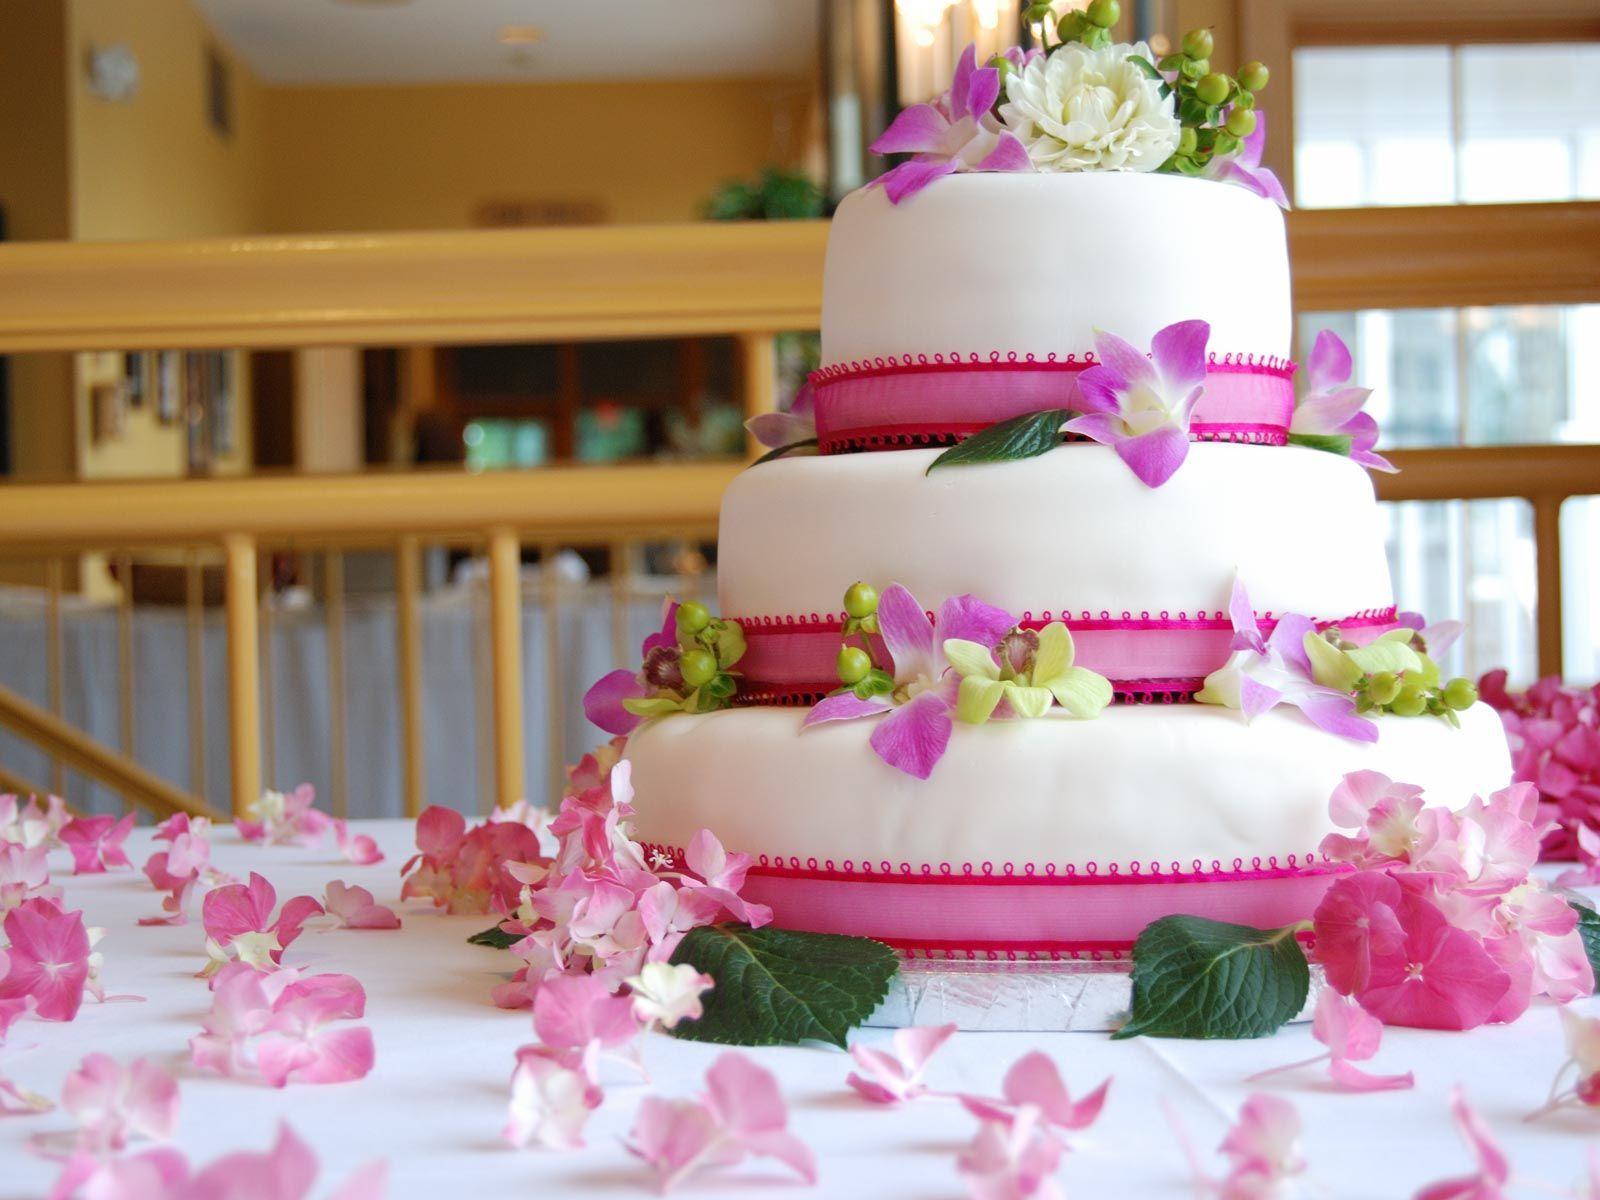 Traditional wedding cake on a white background | Stock image | Colourbox